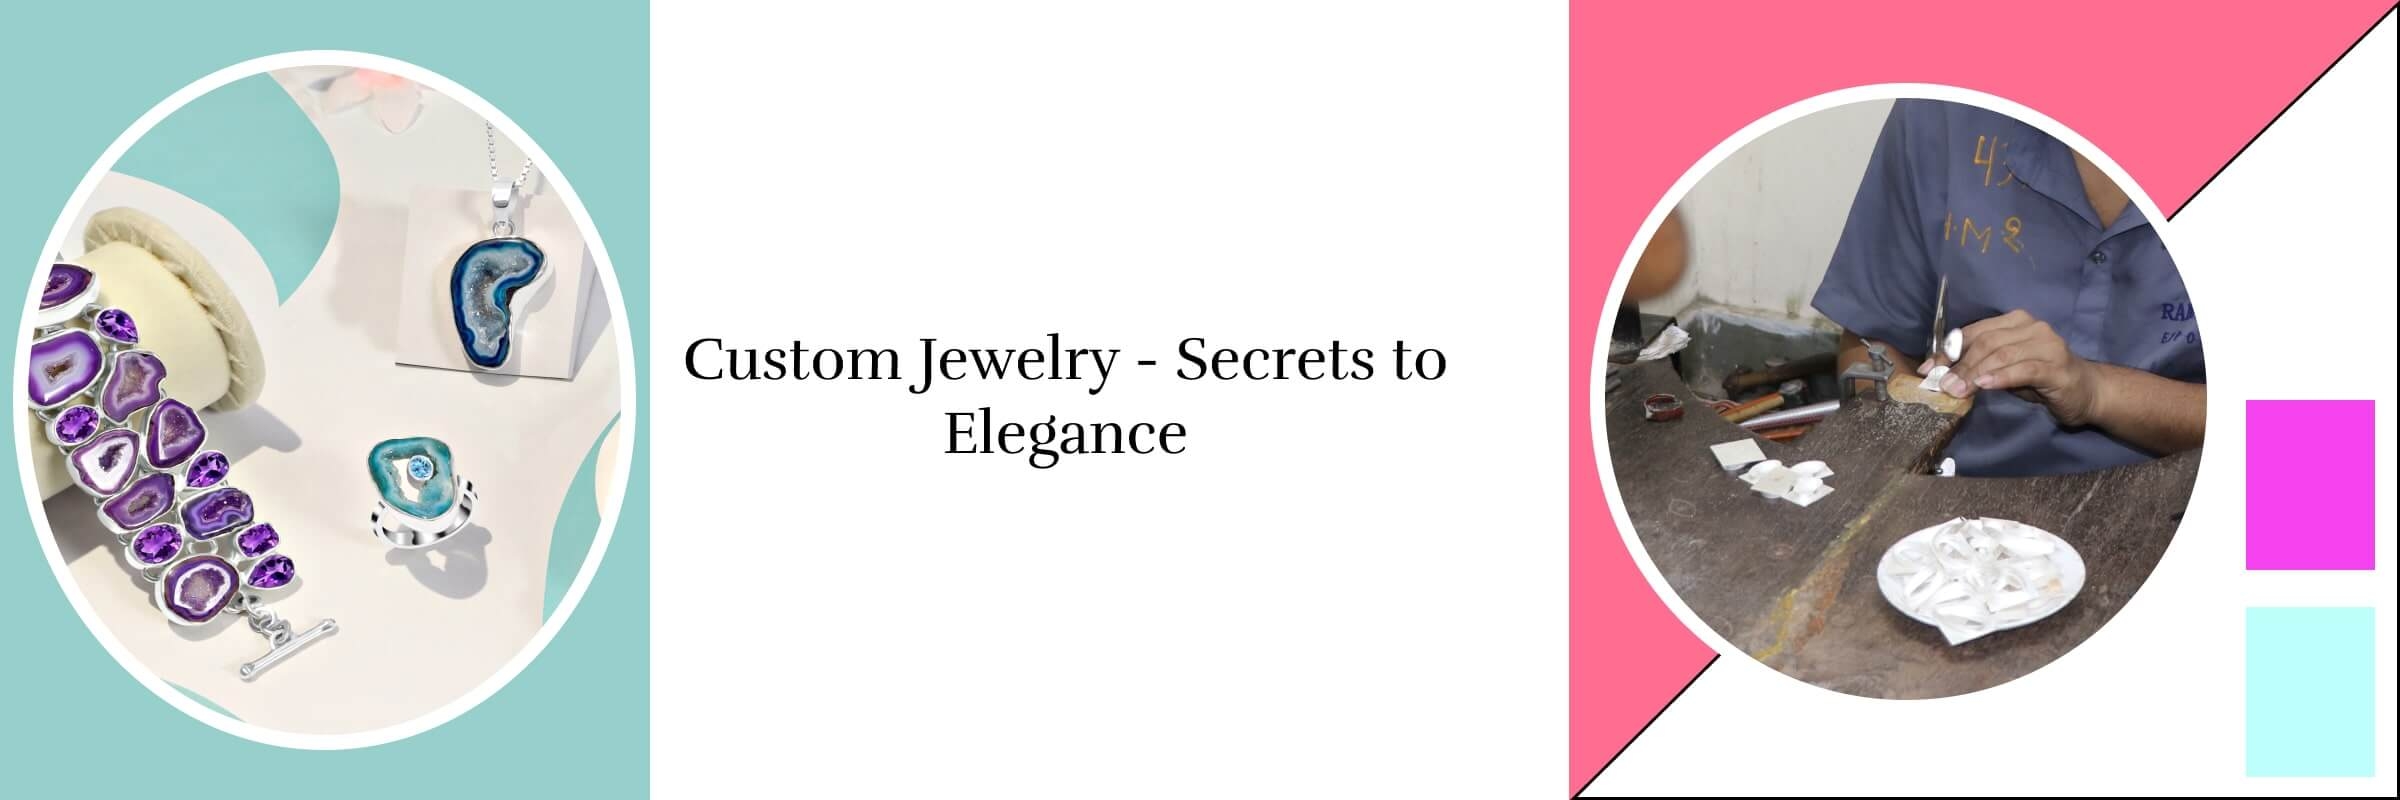 Top Secrets of Custom Jewelry - Personal Elegance